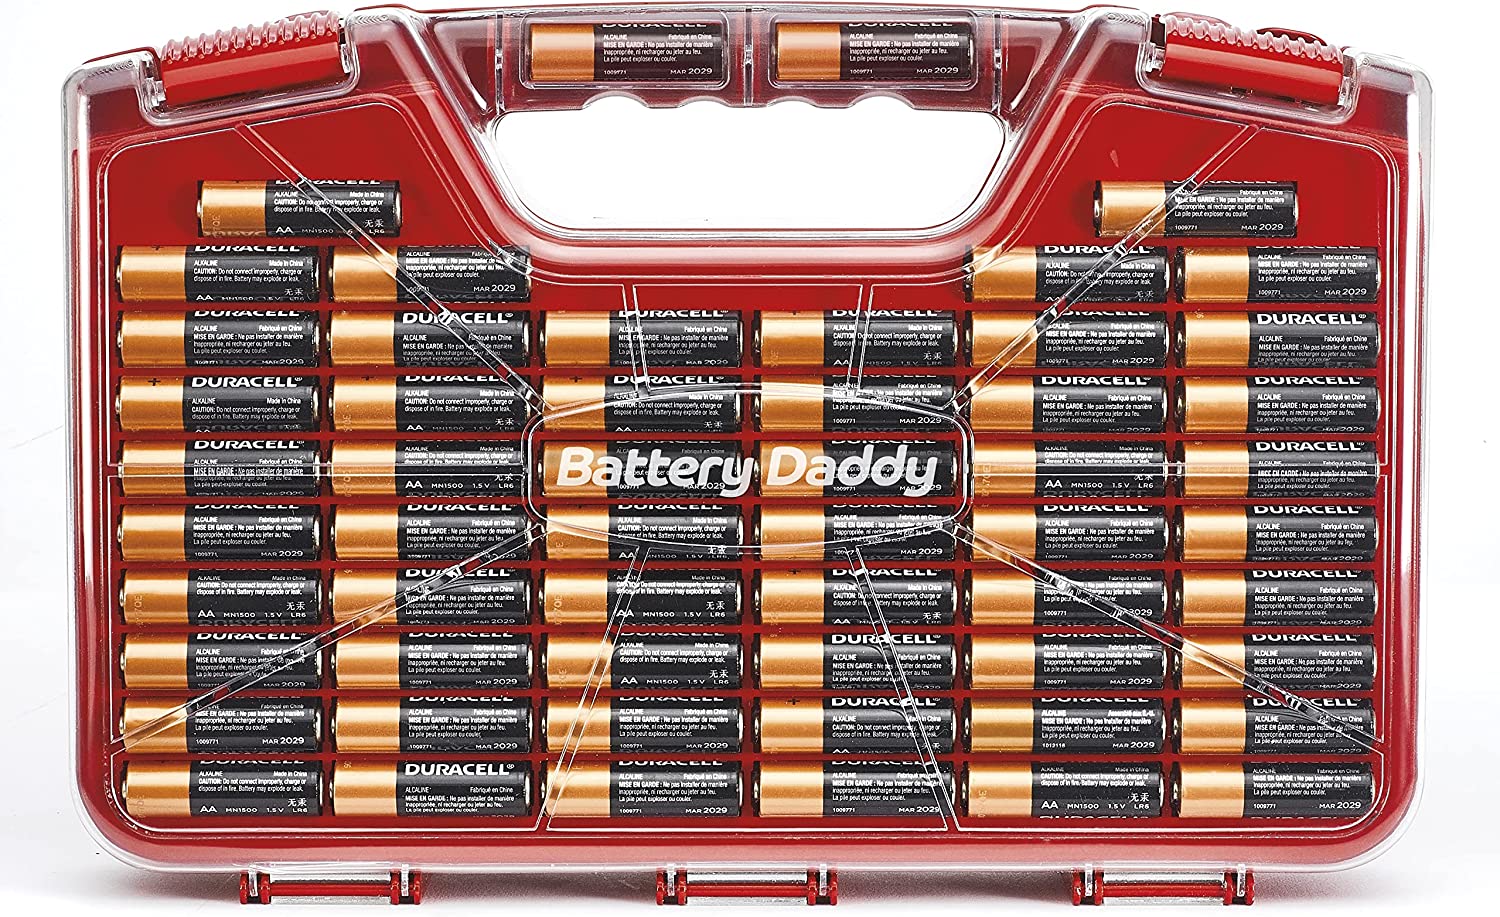 Battery daddy solupiles teleshopping